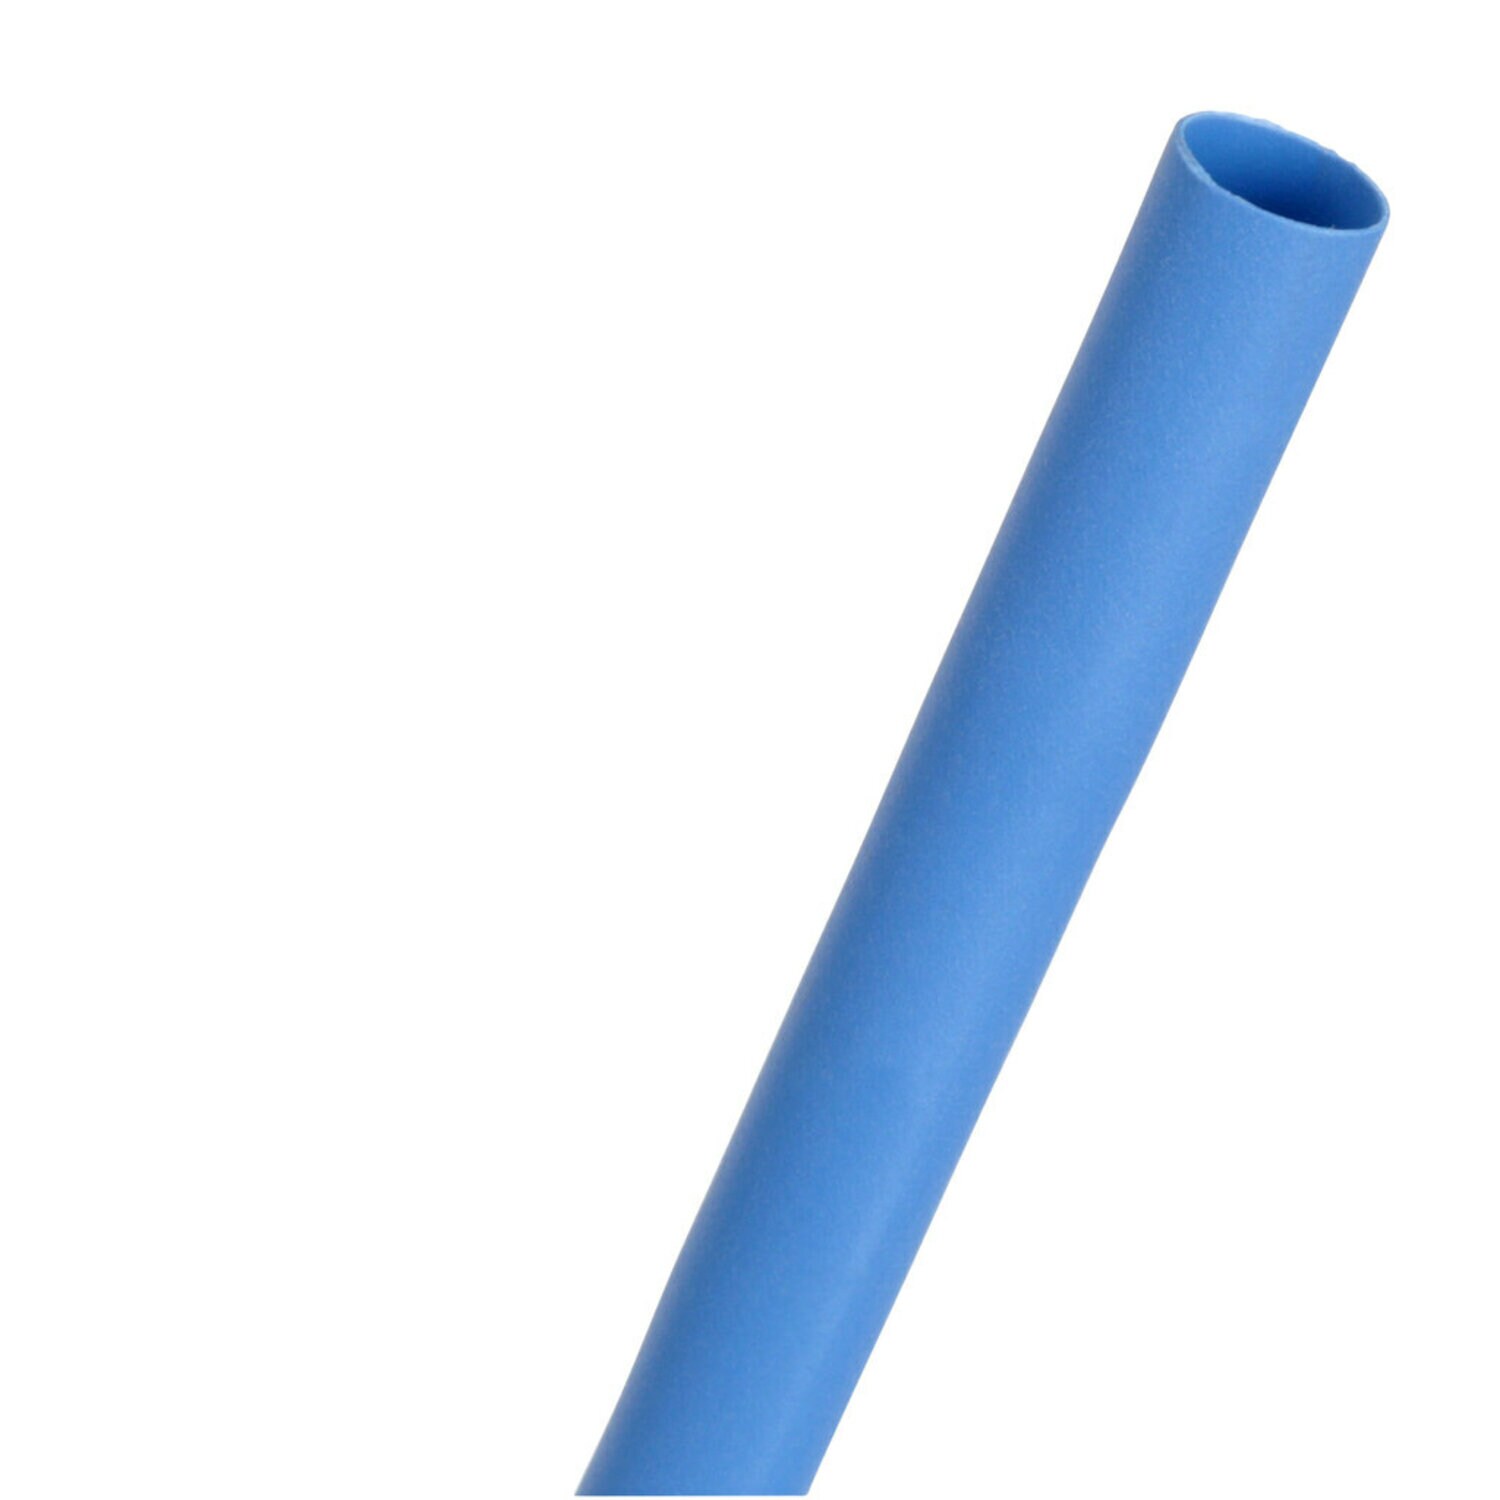 7010305530 - 3M Heat Shrink Thin-Wall Tubing FP-301-3/16-Blue-250`: 250 ft spool
length, 750 linear ft/box, 3 Rolls/Case